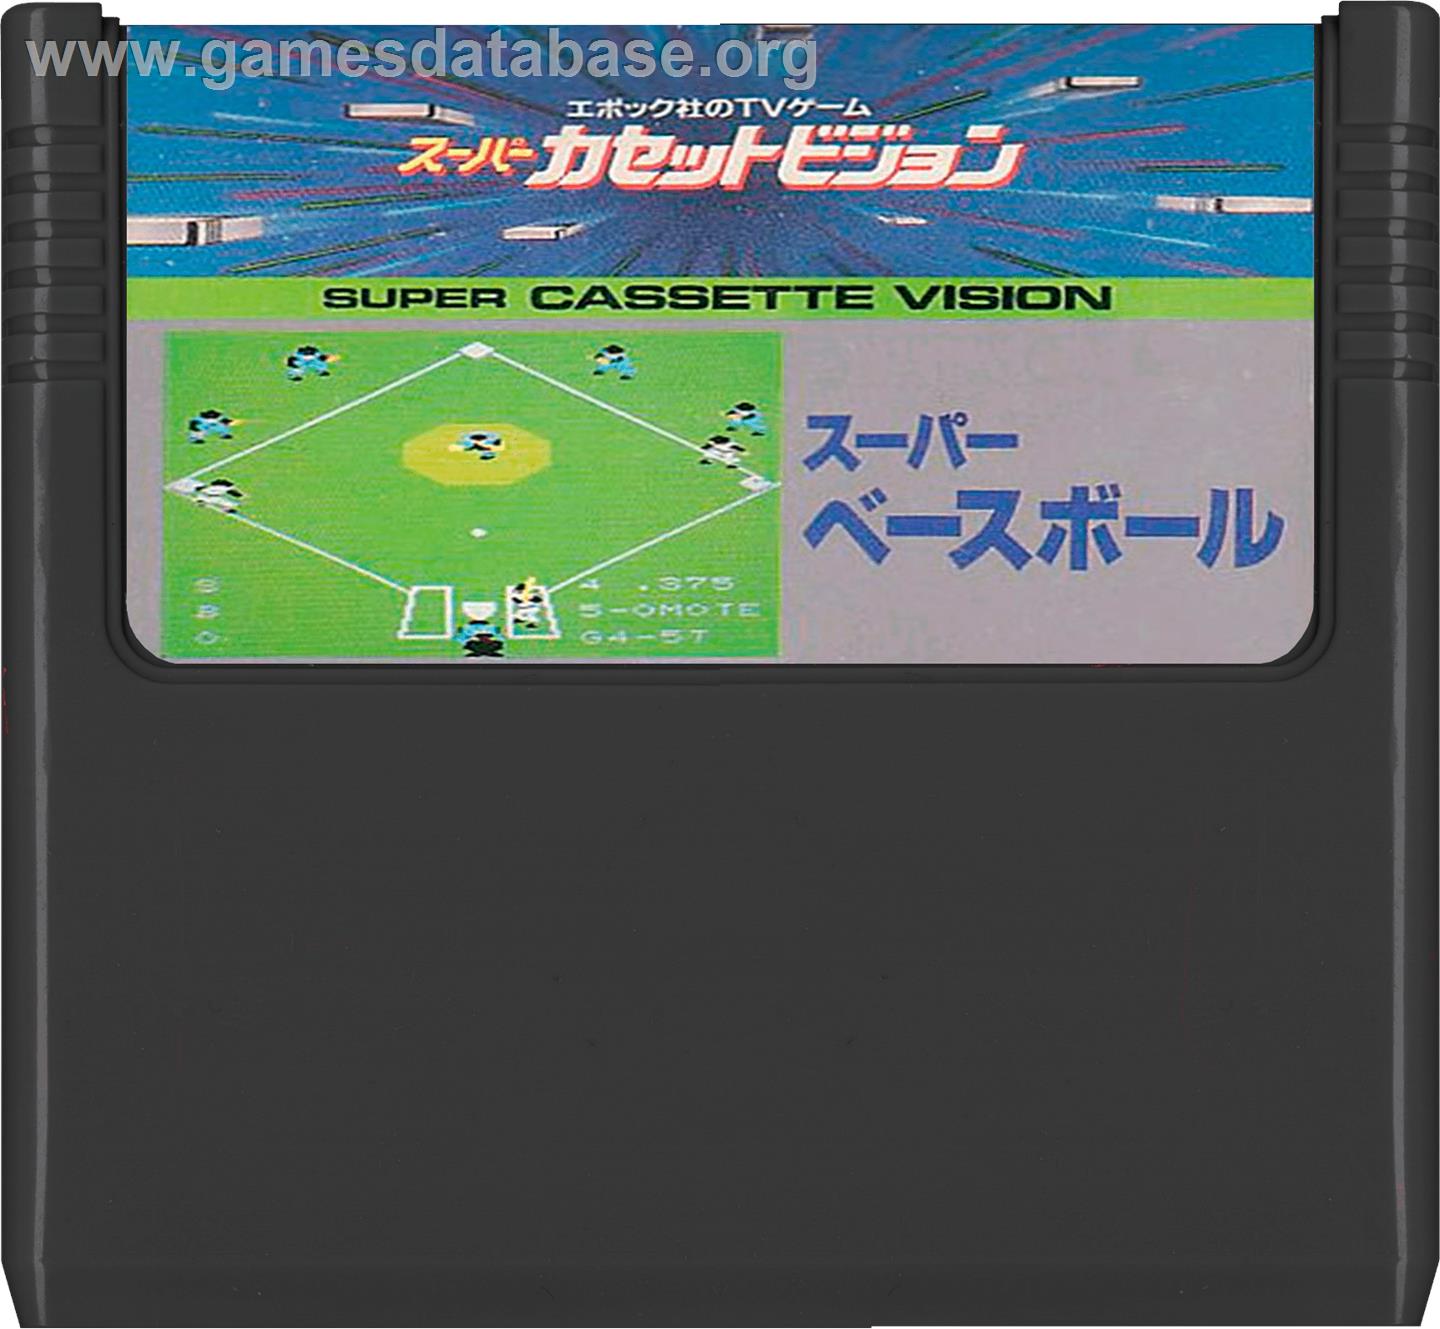 Super Baseball - Epoch Super Cassette Vision - Artwork - Cartridge